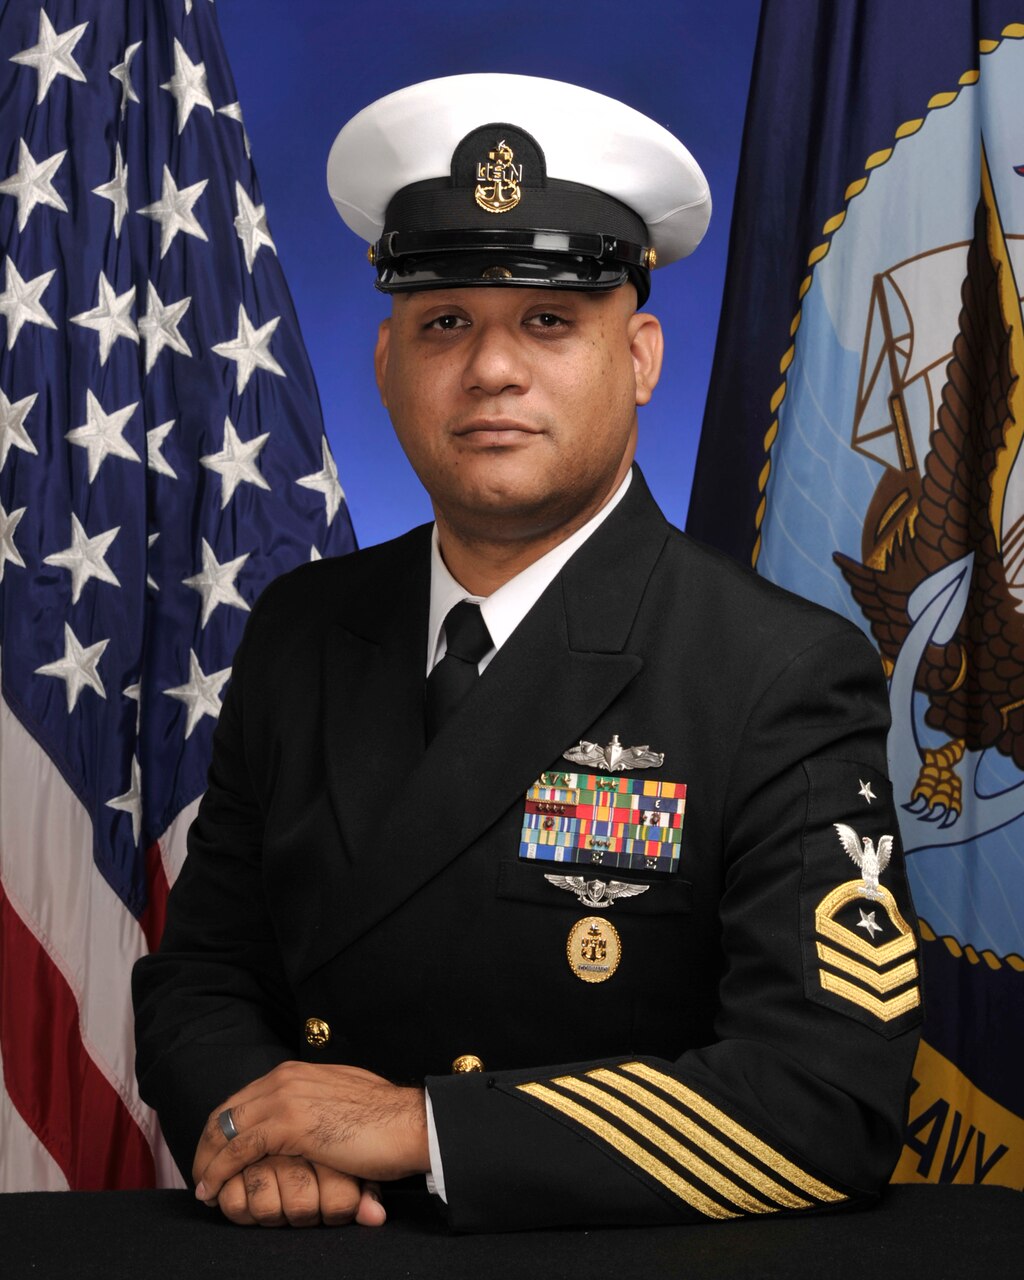 Senior Chief Damien A. Brown